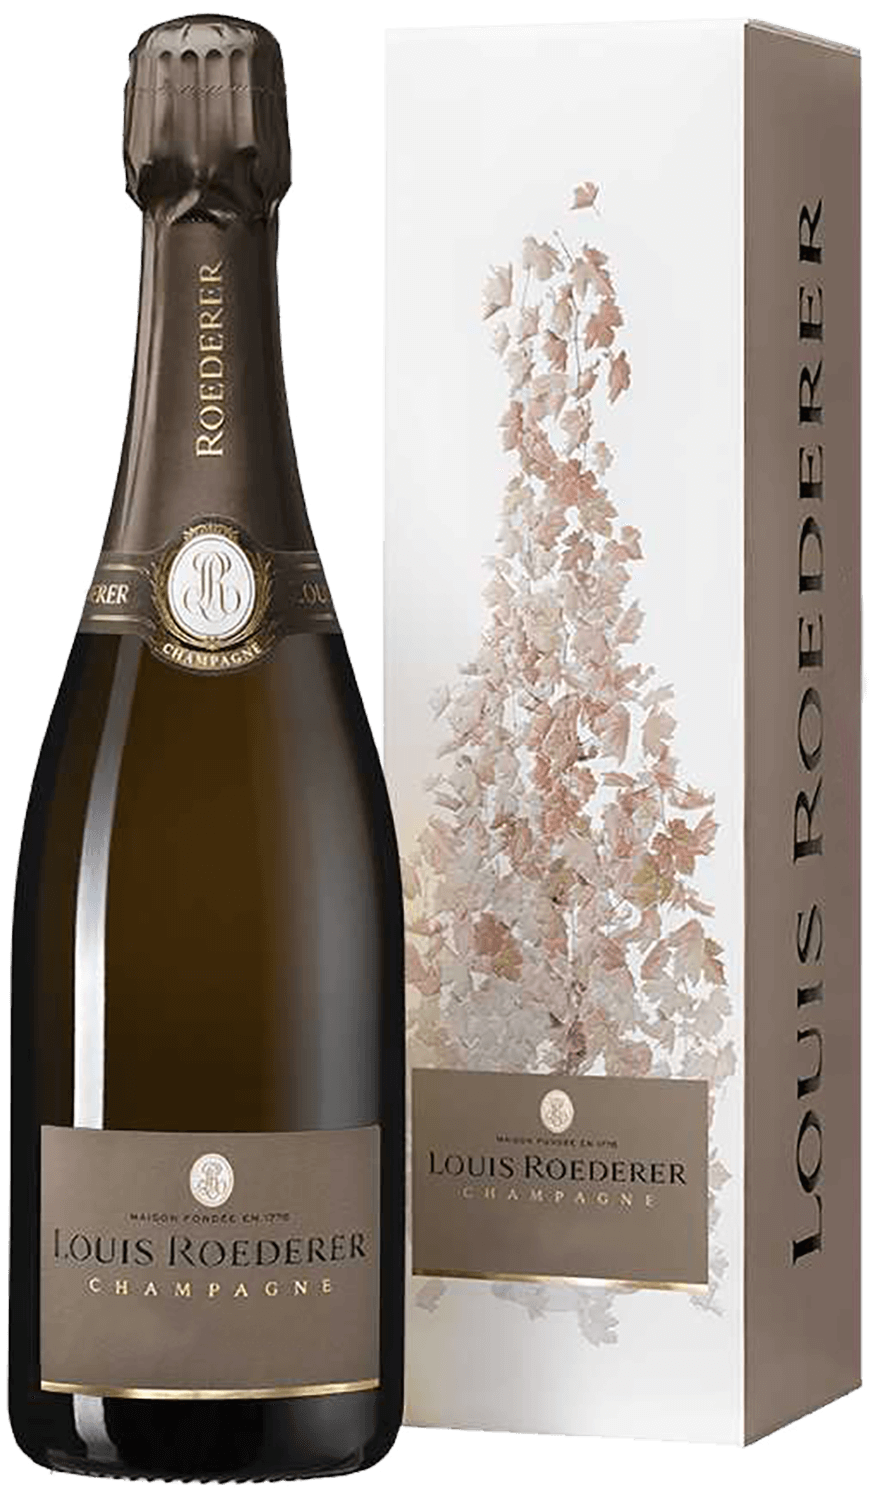 Vintage Brut Champagne AOC Louis Roederer (gift box) brut nature champagne aoc louis roederer gift box